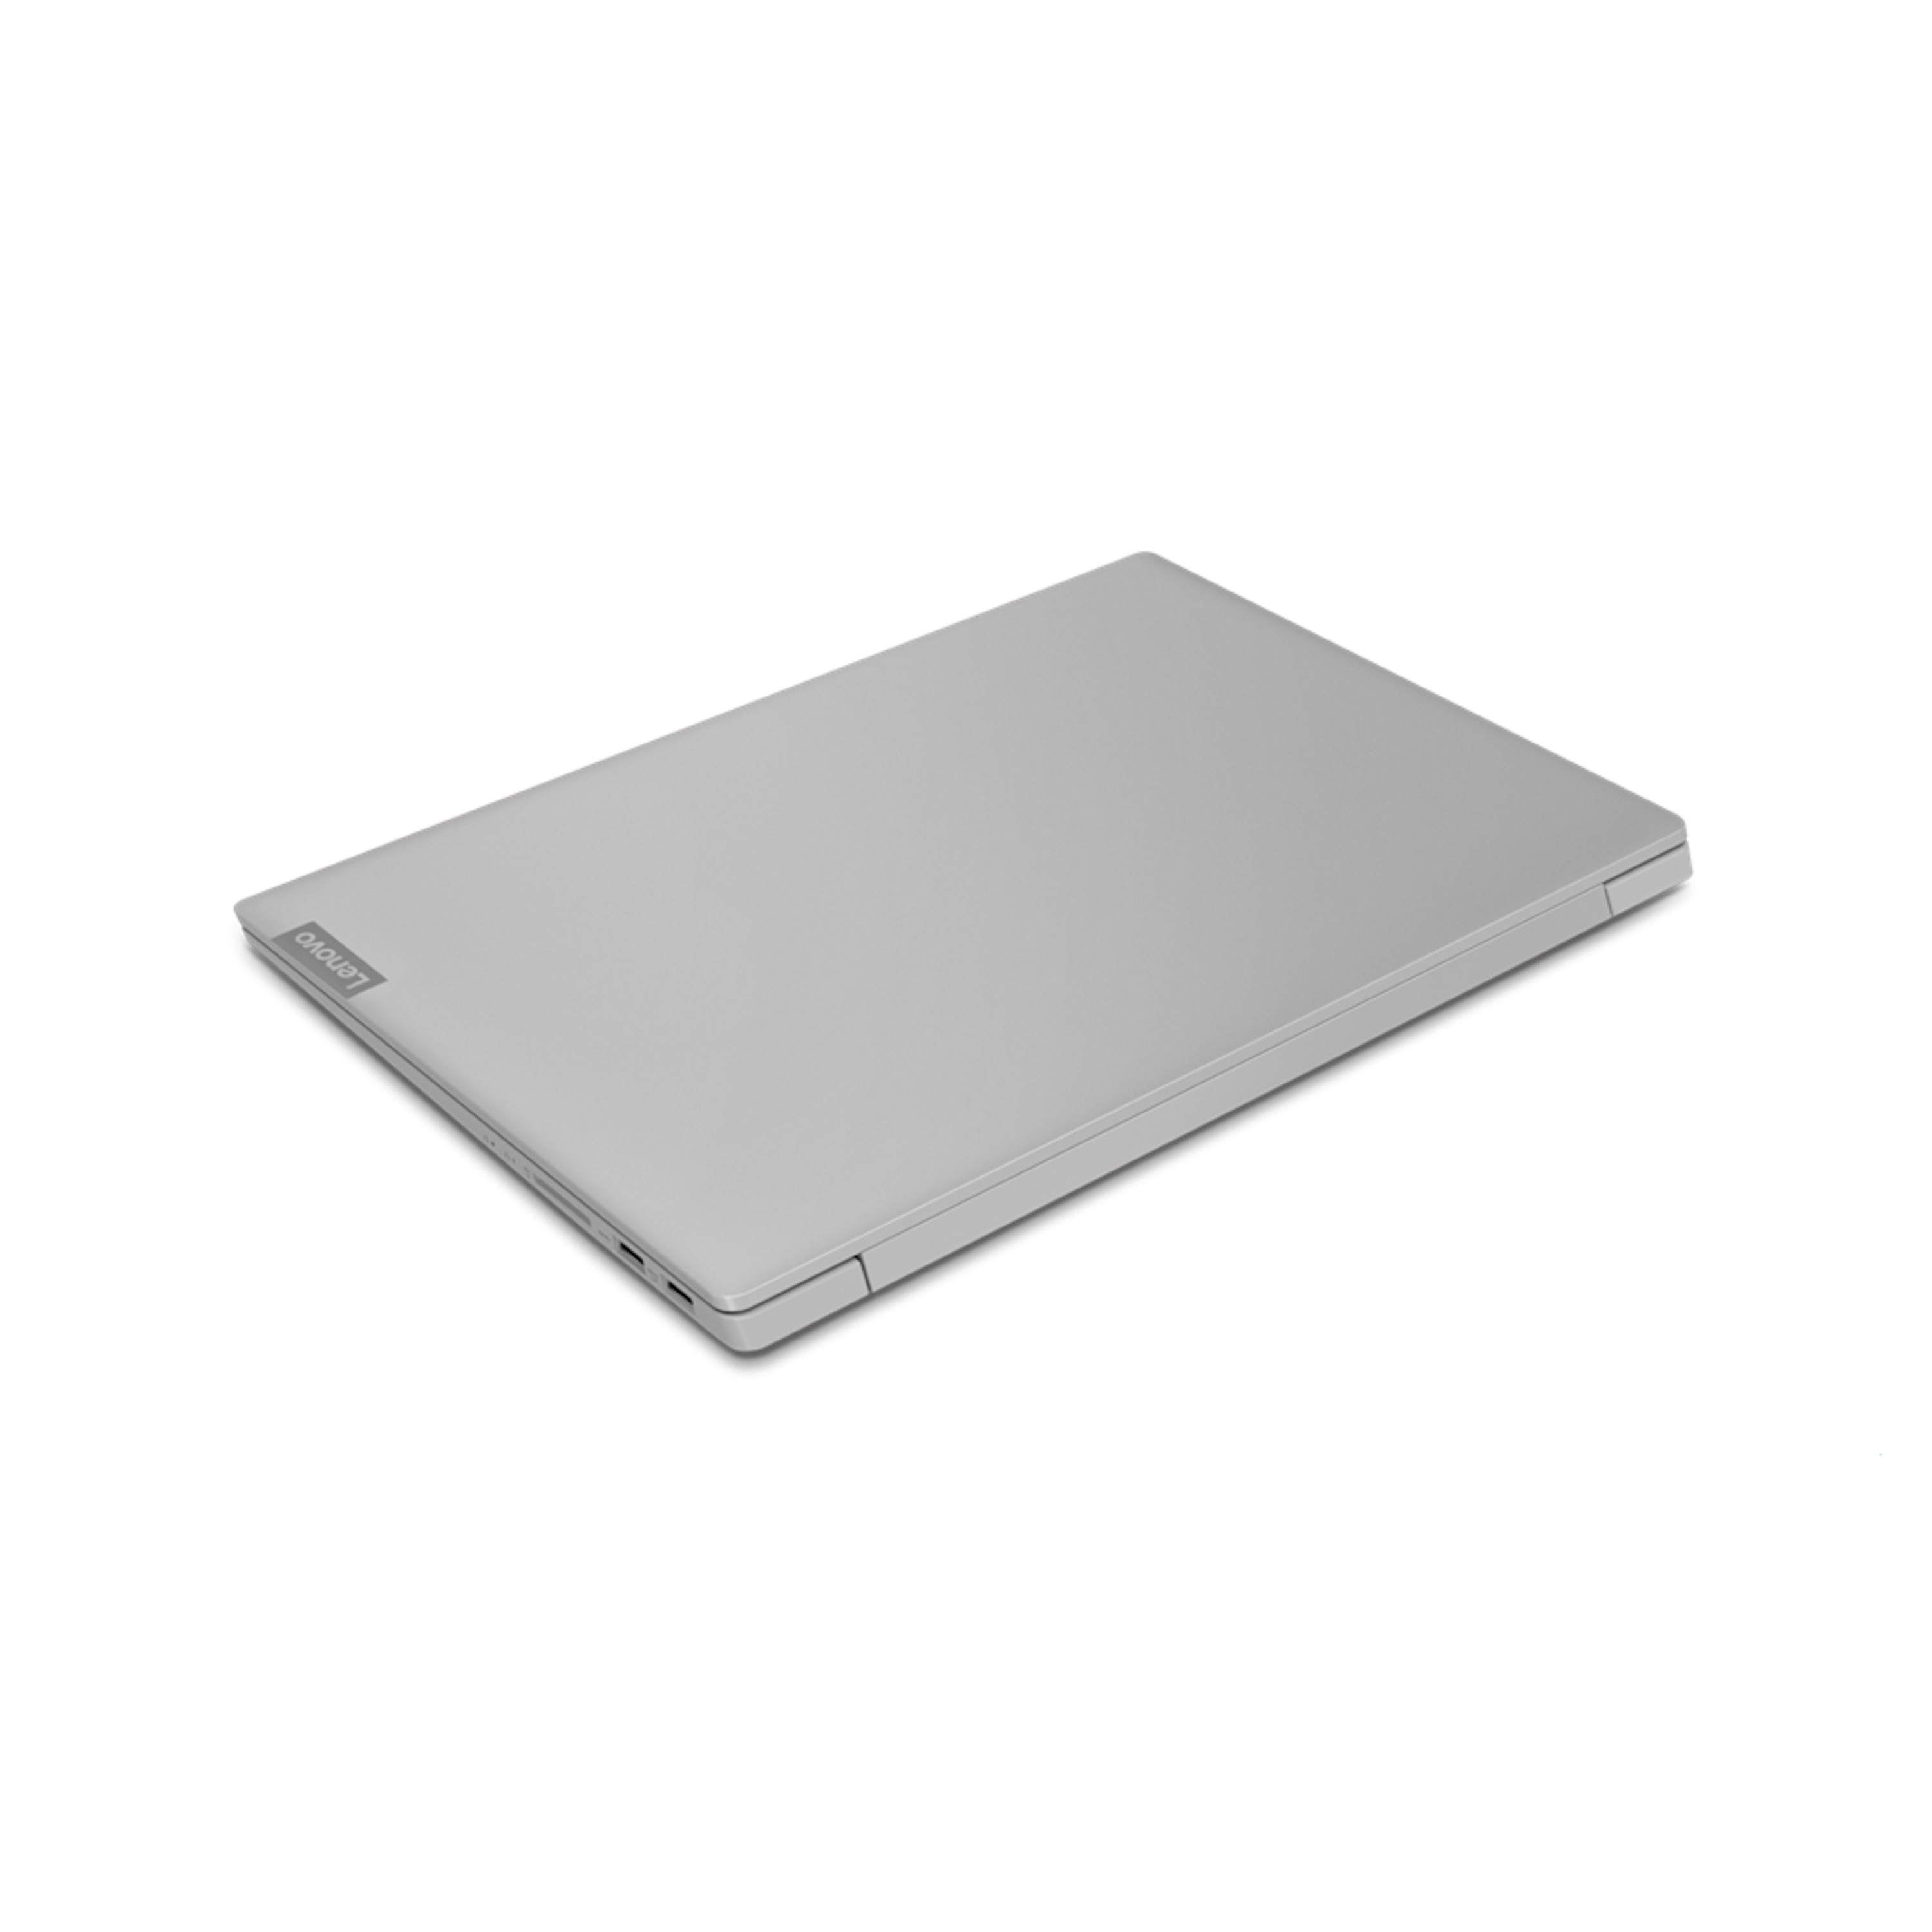 LENOVO IdeaPad™ S340-15API, AMD Ryzen™ 5 3500U, Windows 10 Home, 39,6 cm (15,6") FHD Display, 1 TB PCIe SSD, 8 GB DDR4 RAM, Notebook (B-Ware)